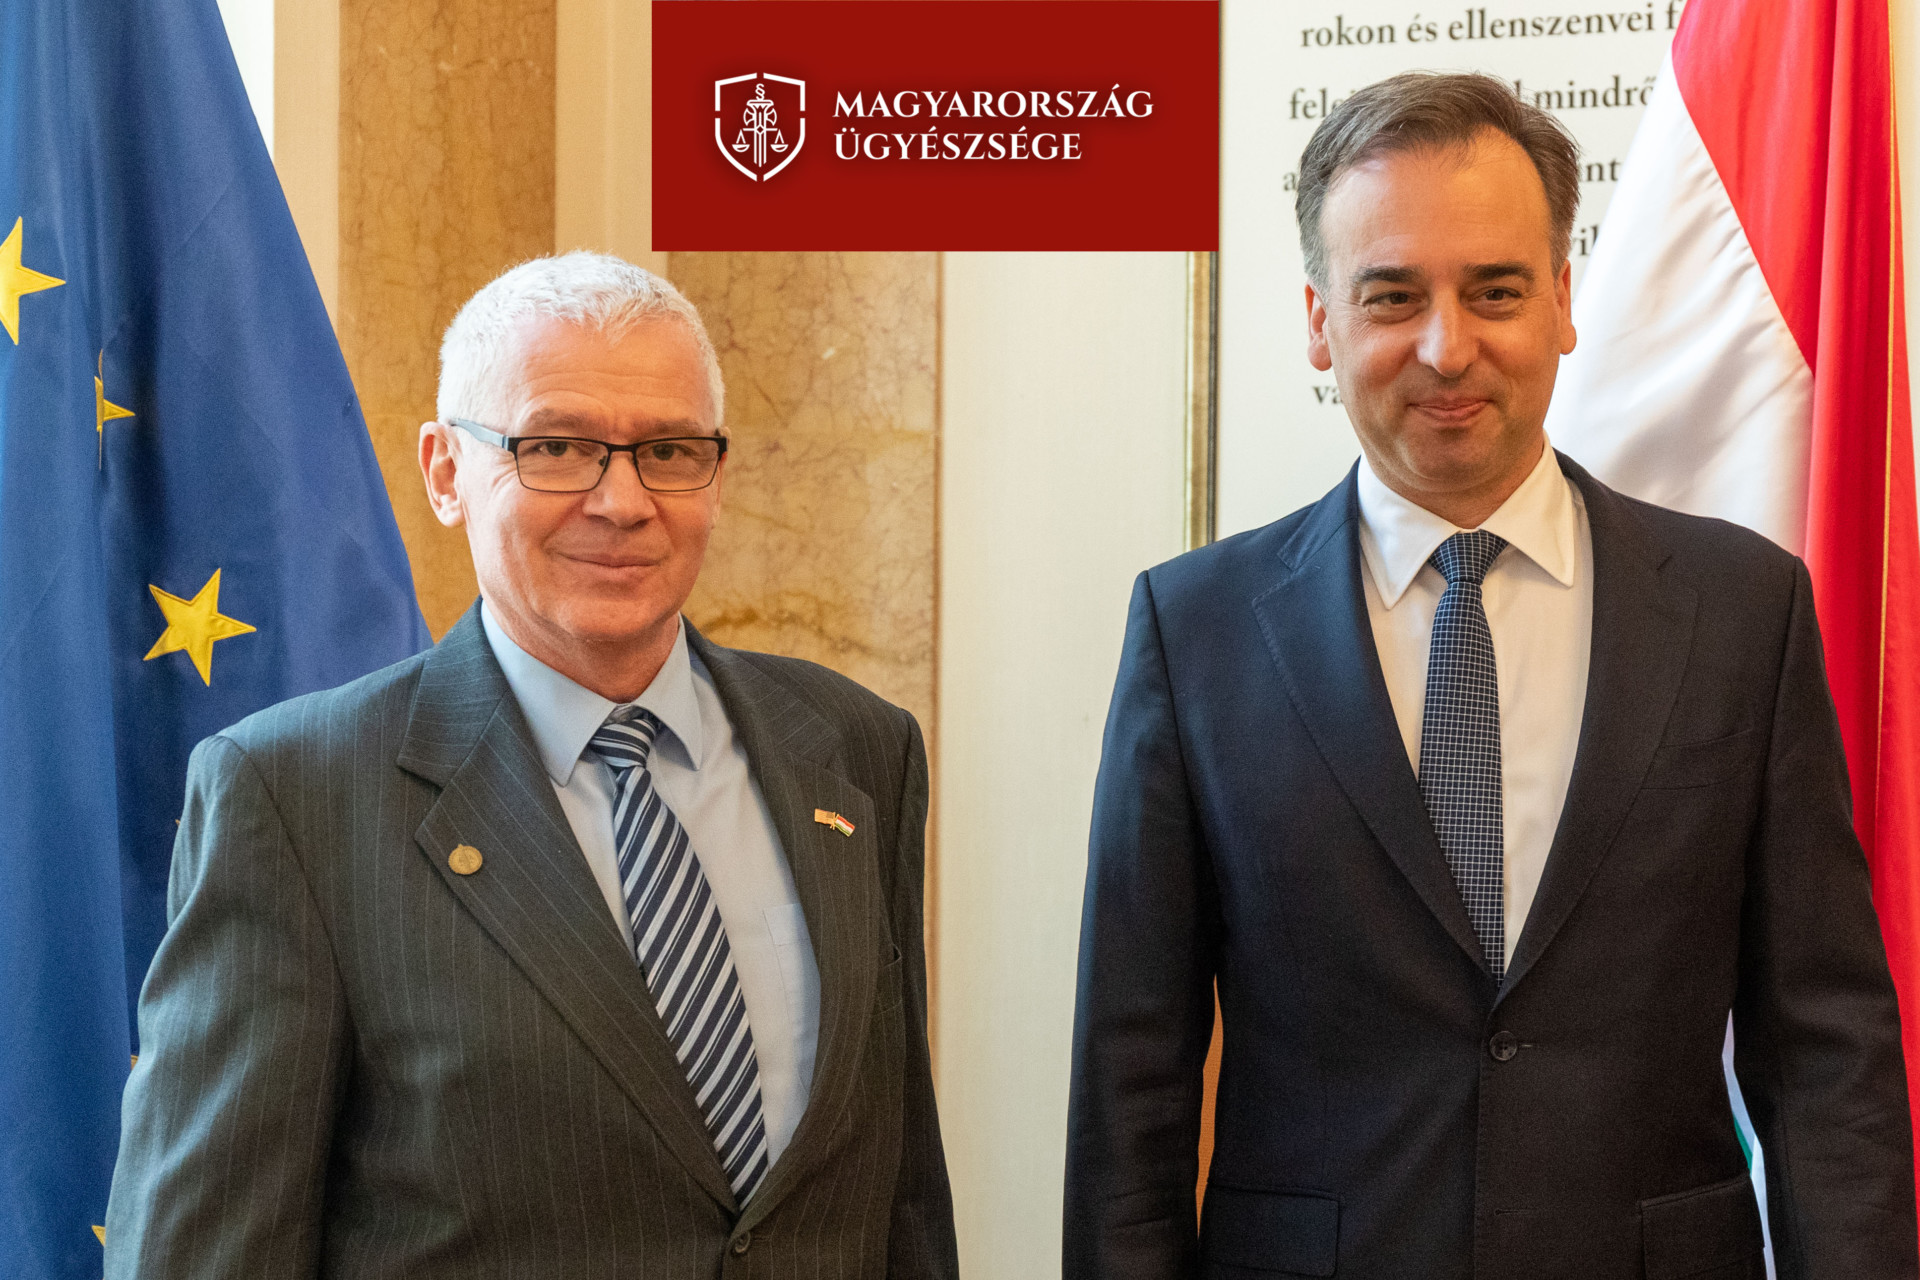 A meeting between David Pressman, the US Ambassador to Hungary, and the Chief Public Prosecutor, Dr. Peter Bolt